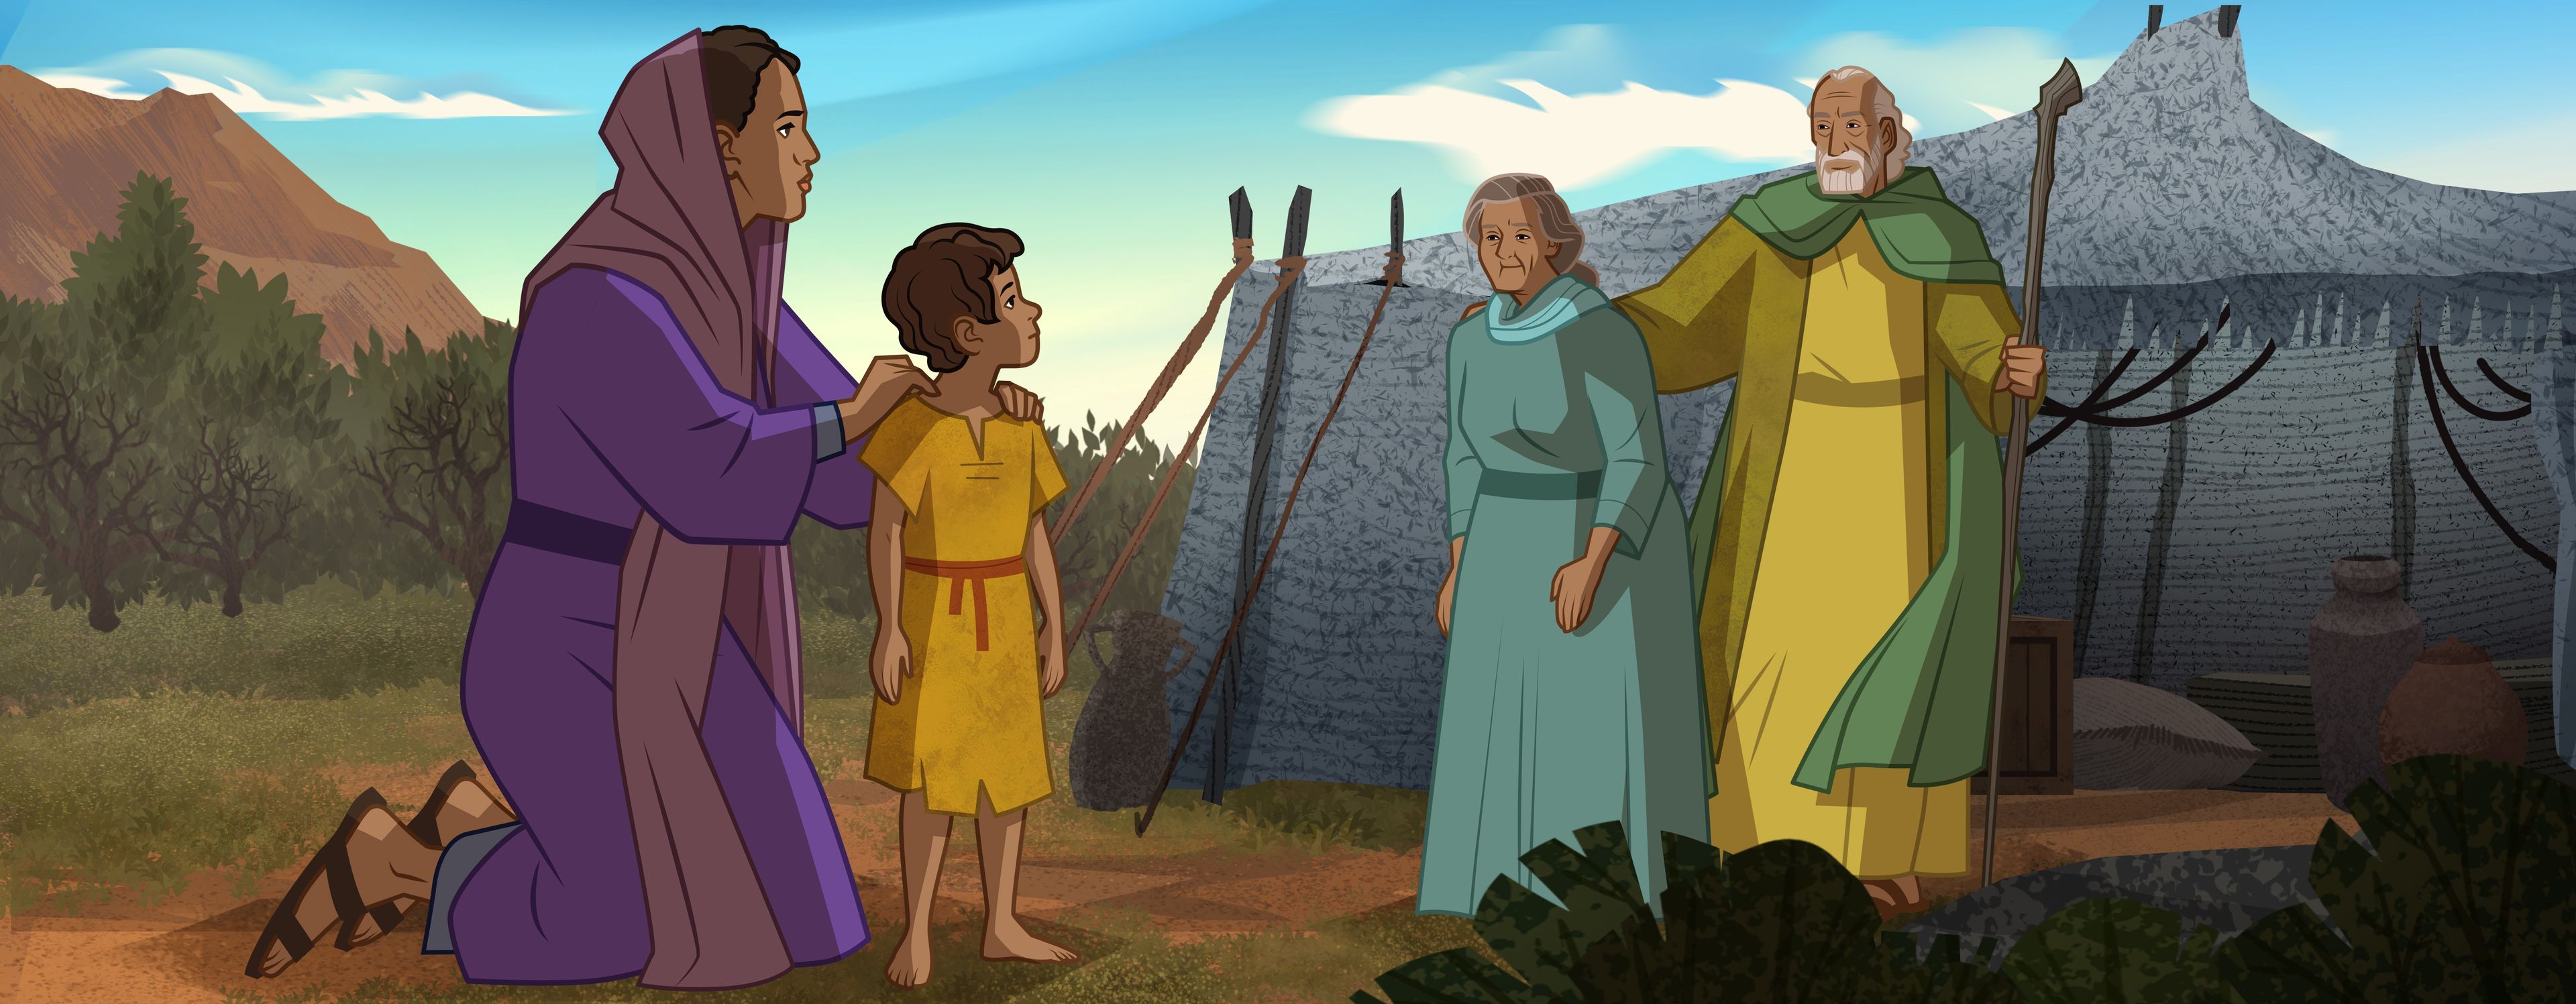 Illustration of Hagar and Ishmael with Abraham and Sarah. Genesis 16:11, 15